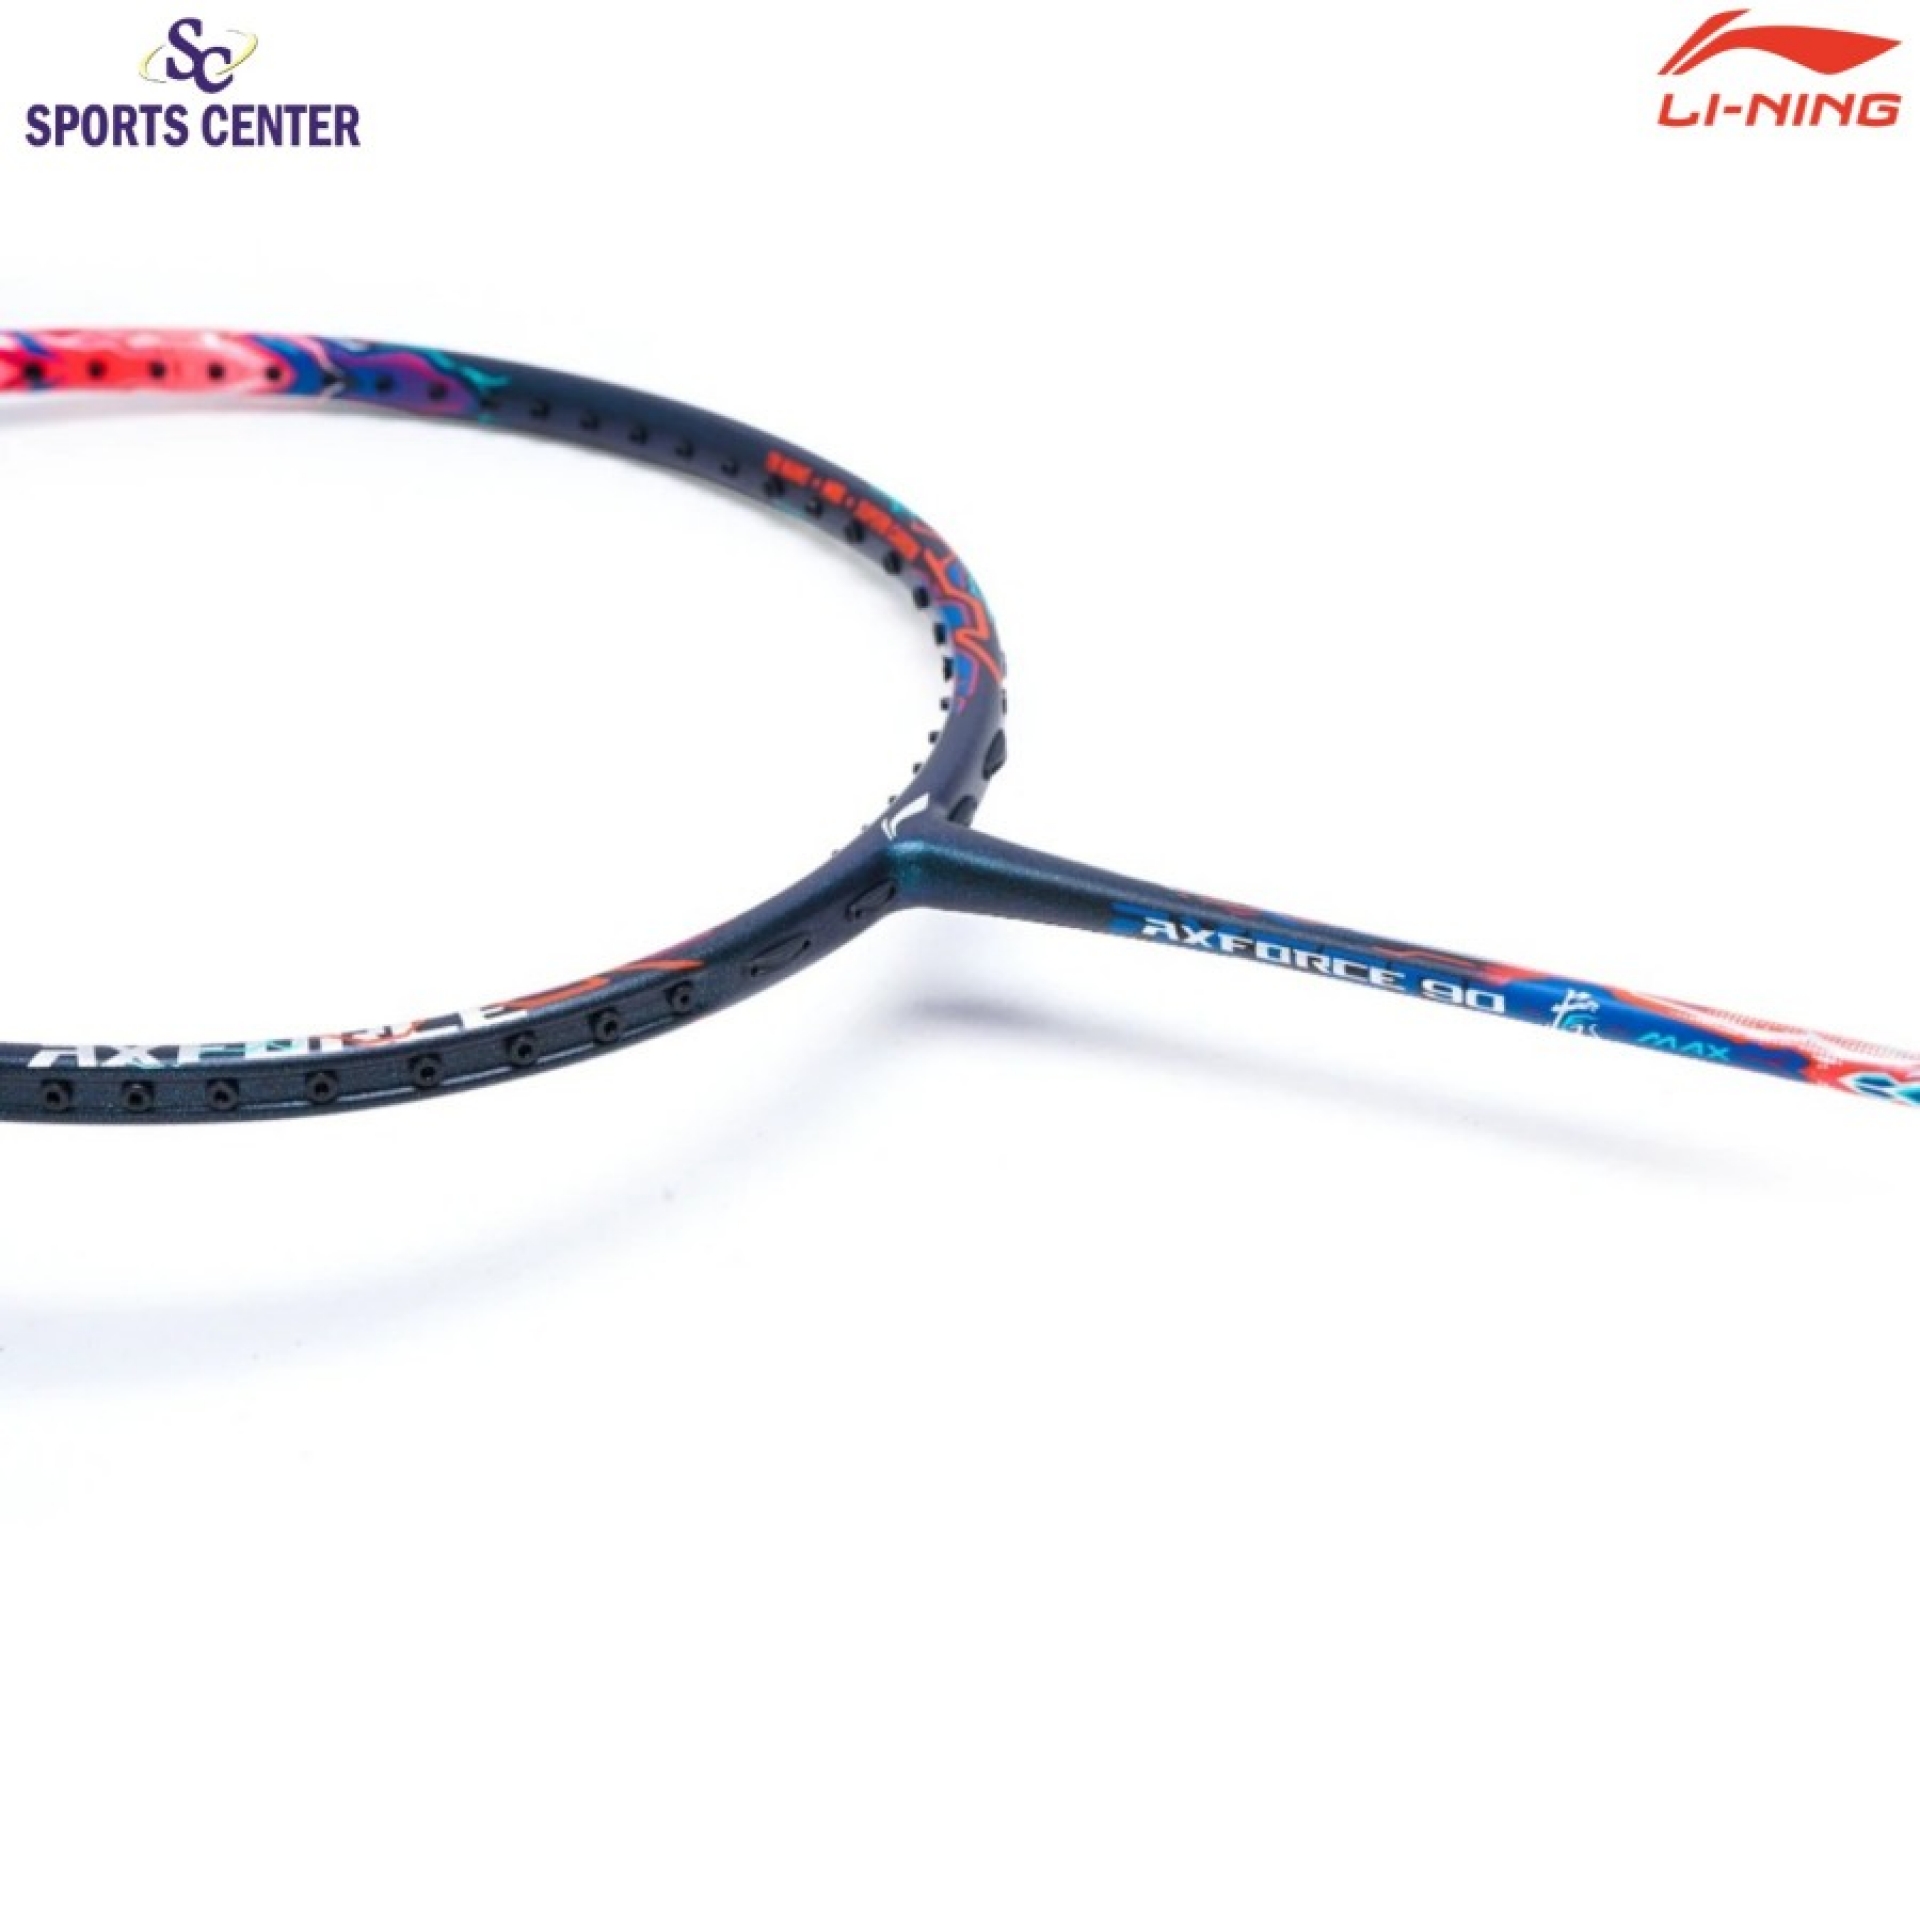 New Raket Badminton Lining AX Force / Axforce 90 Tiger Max | Sports Center